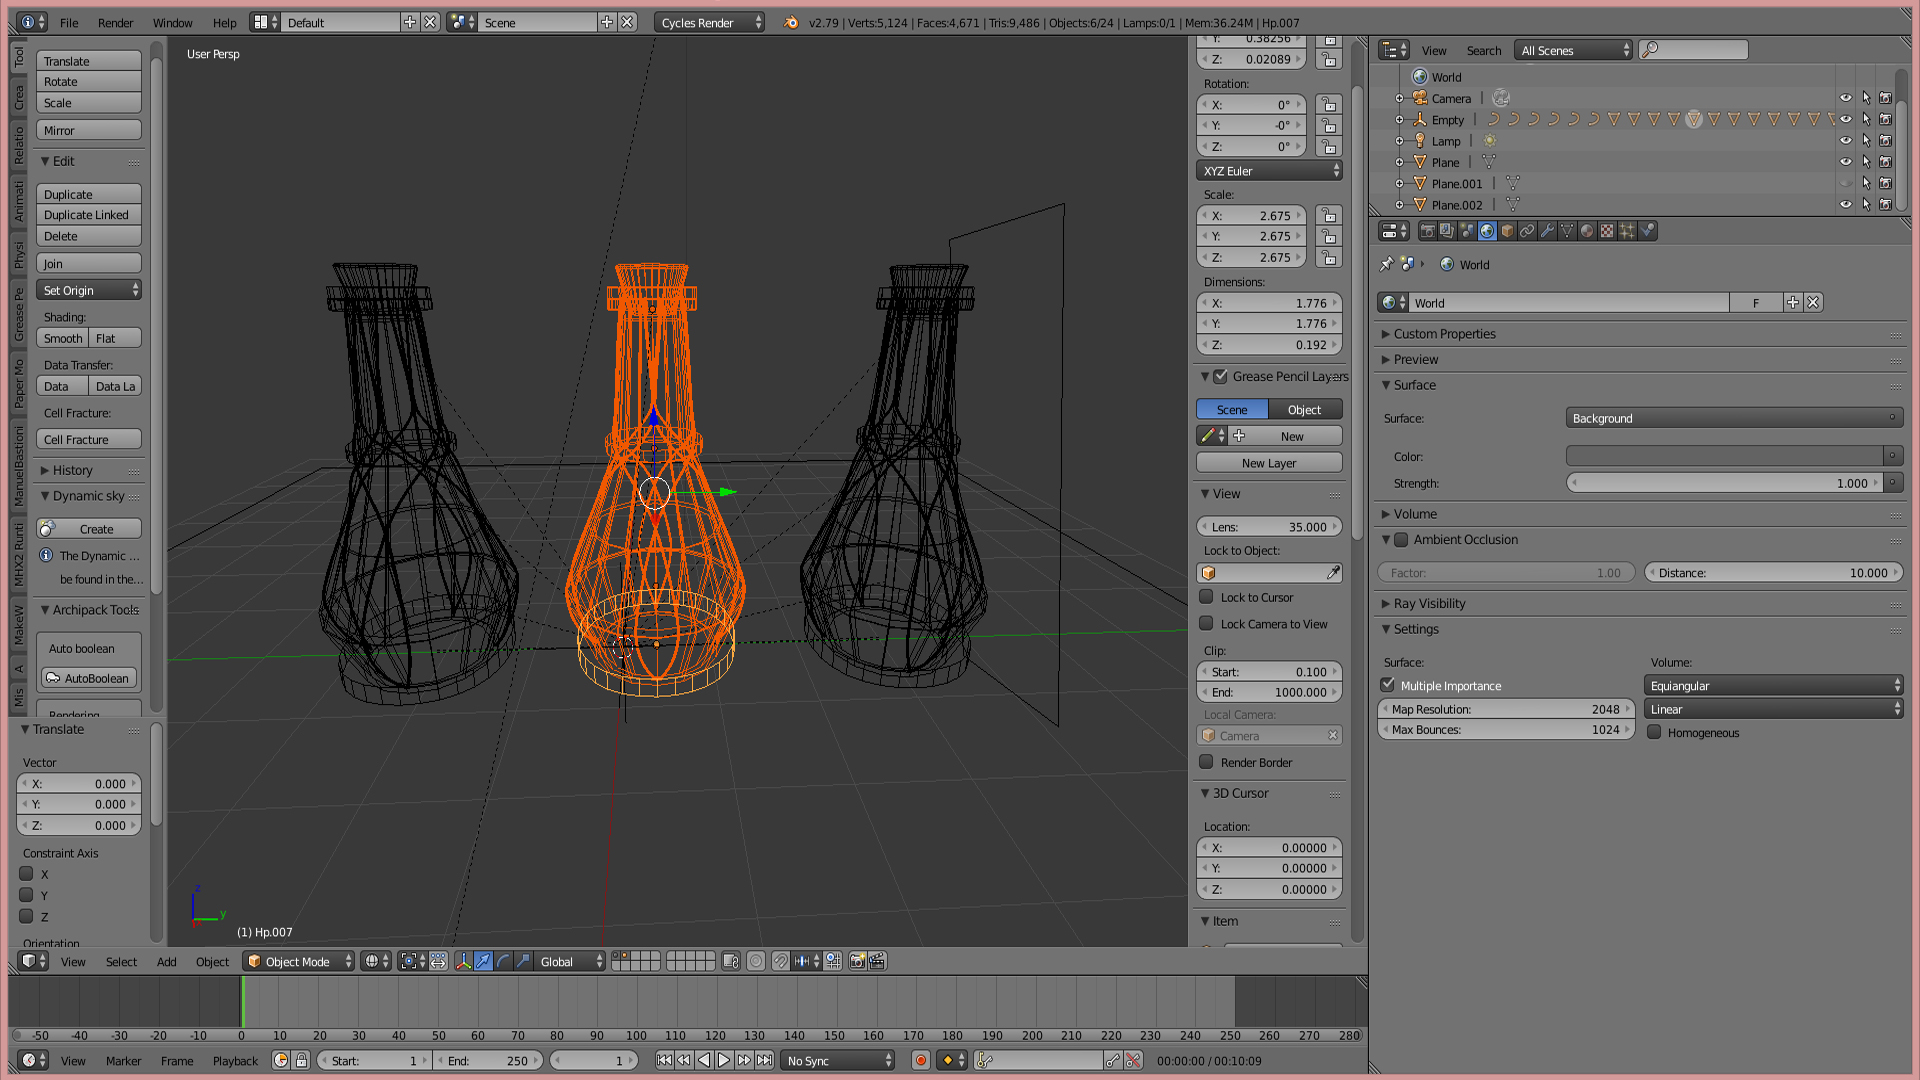 3D Poison Bottle - игровой актив в Blender cycles render изображение